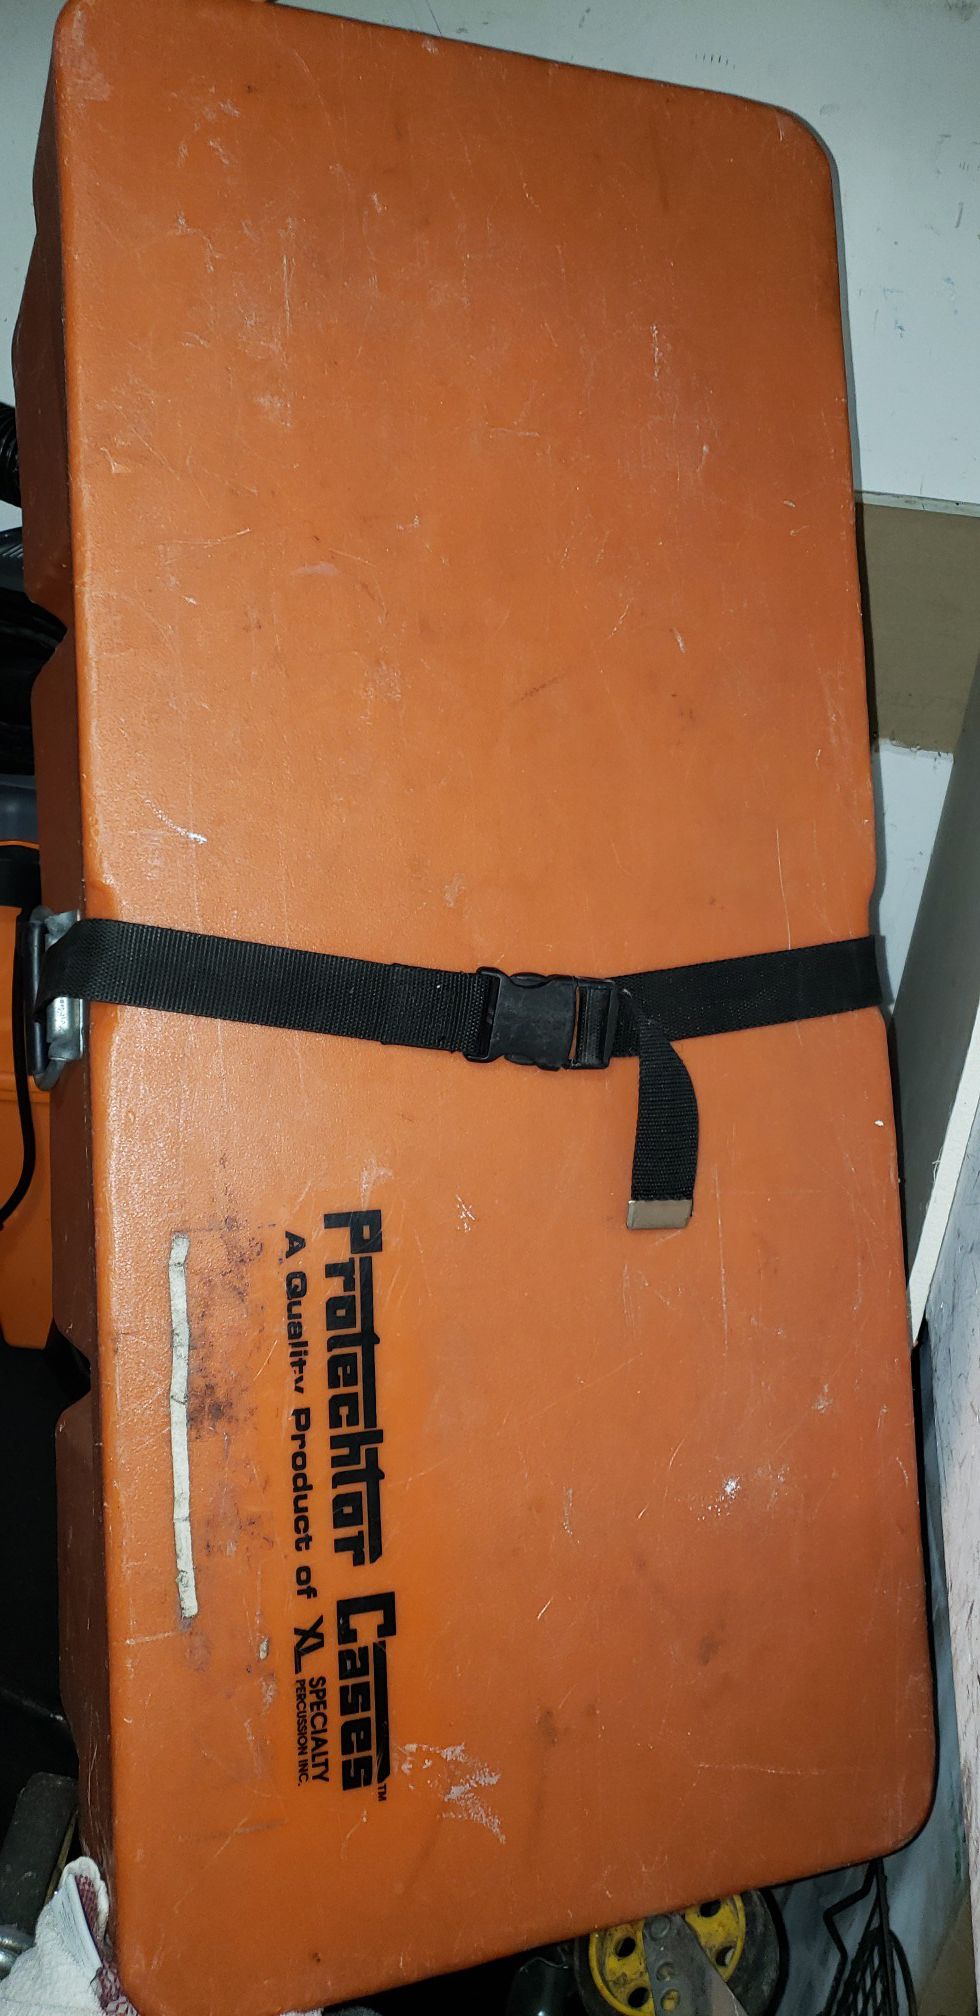 Protector Cases drum hardware case